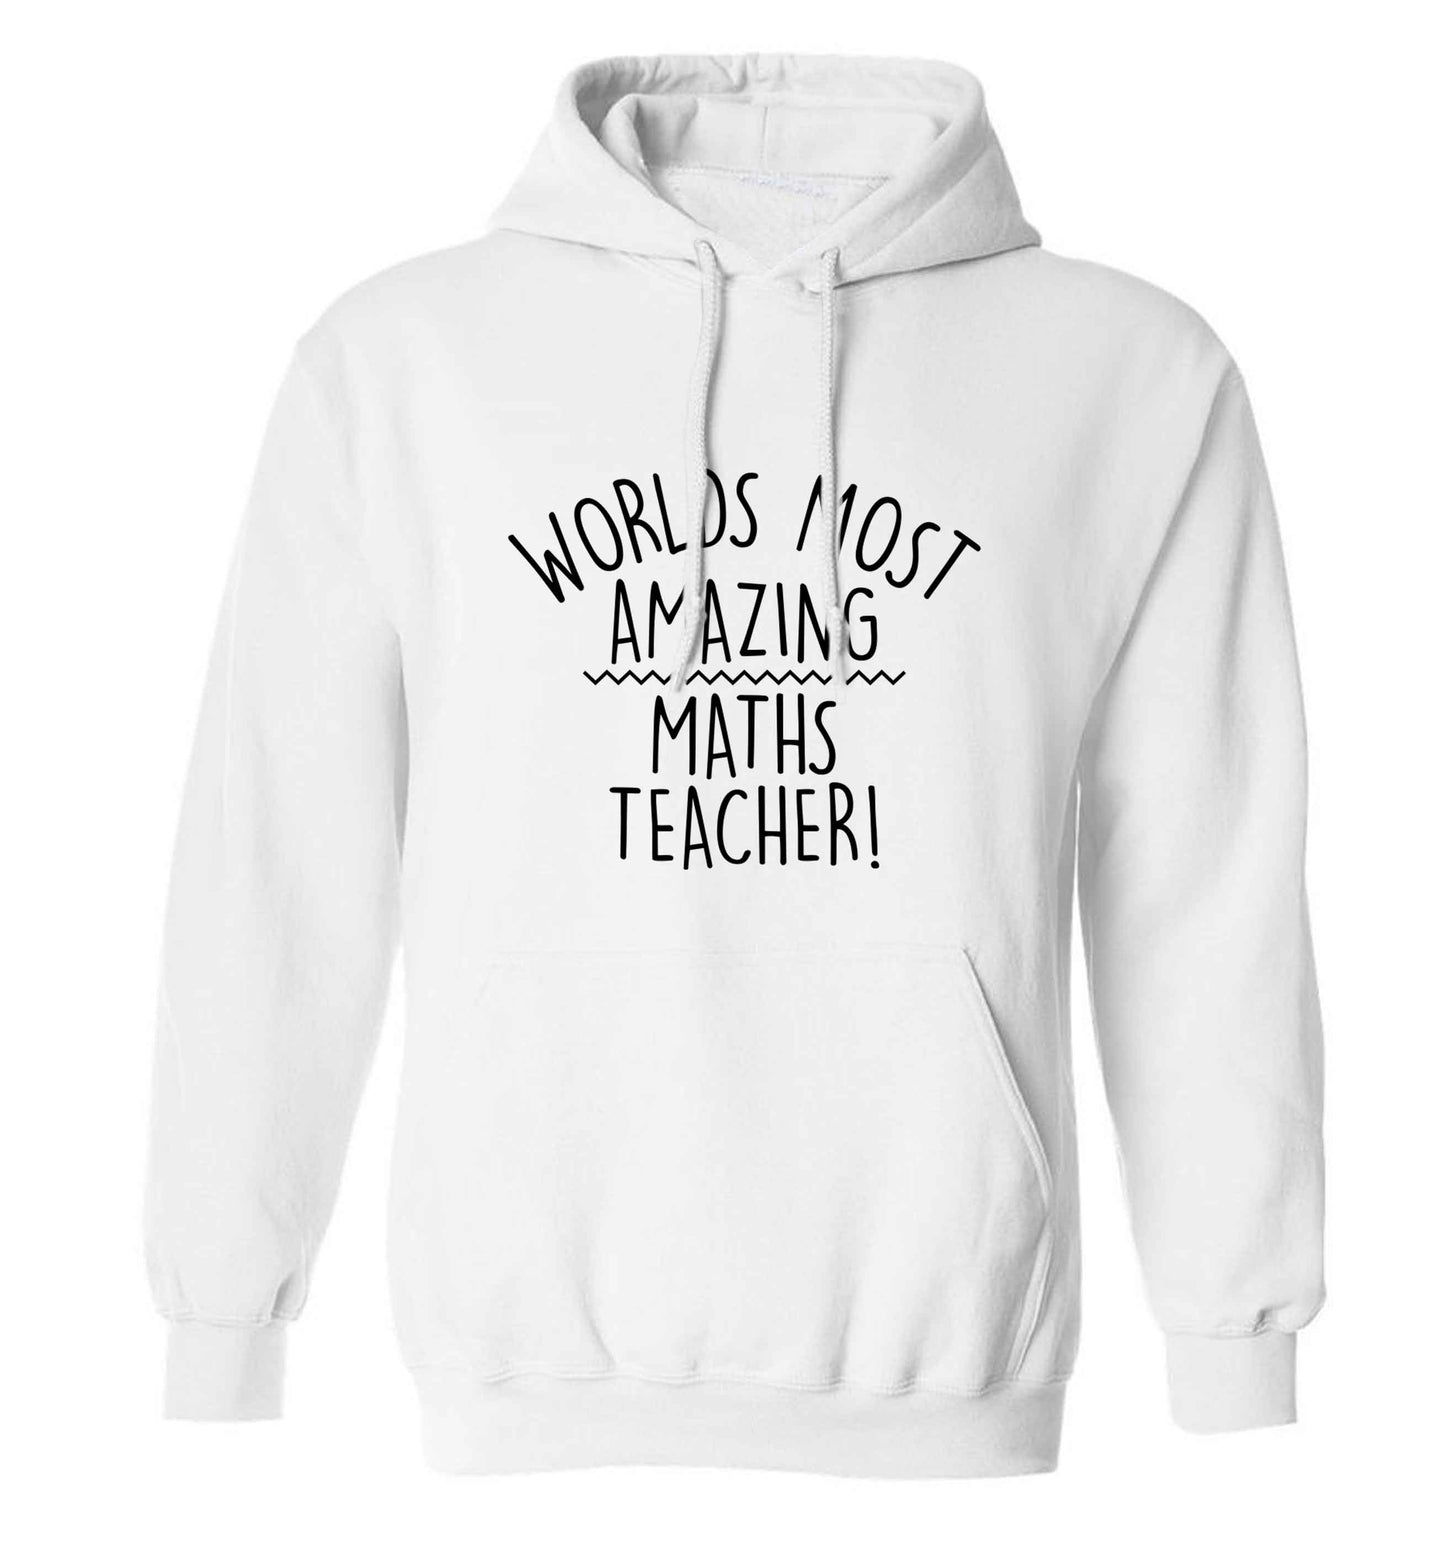 Worlds most amazing maths teacher adults unisex white hoodie 2XL